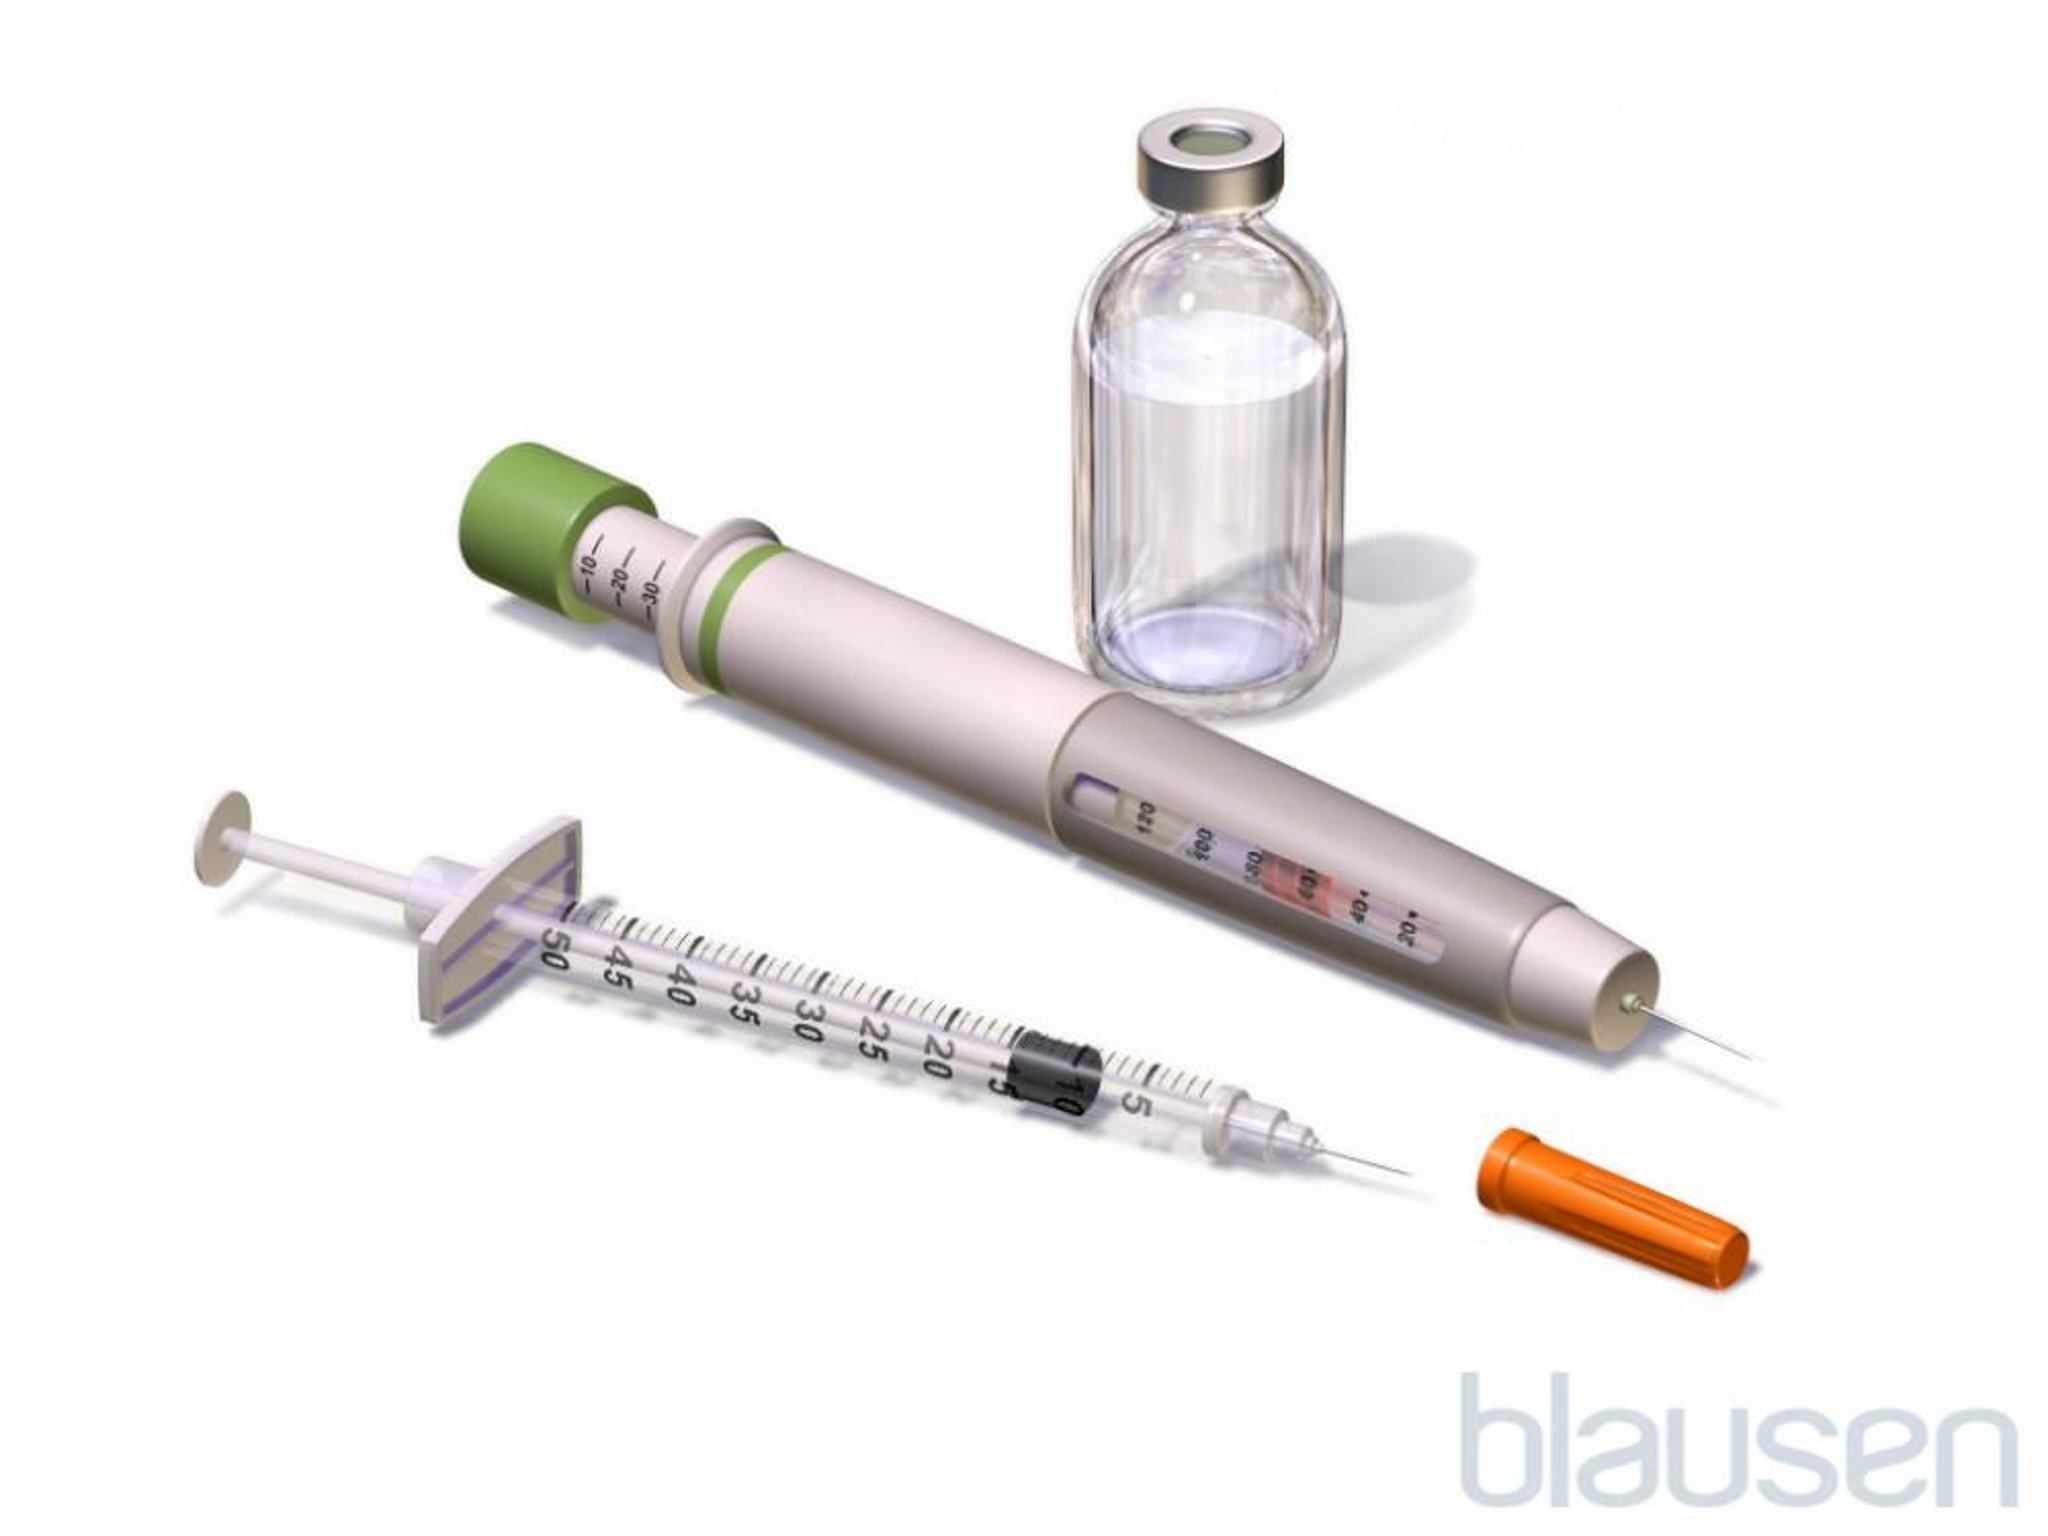 Insulin-Spritze und Insulin-Pen